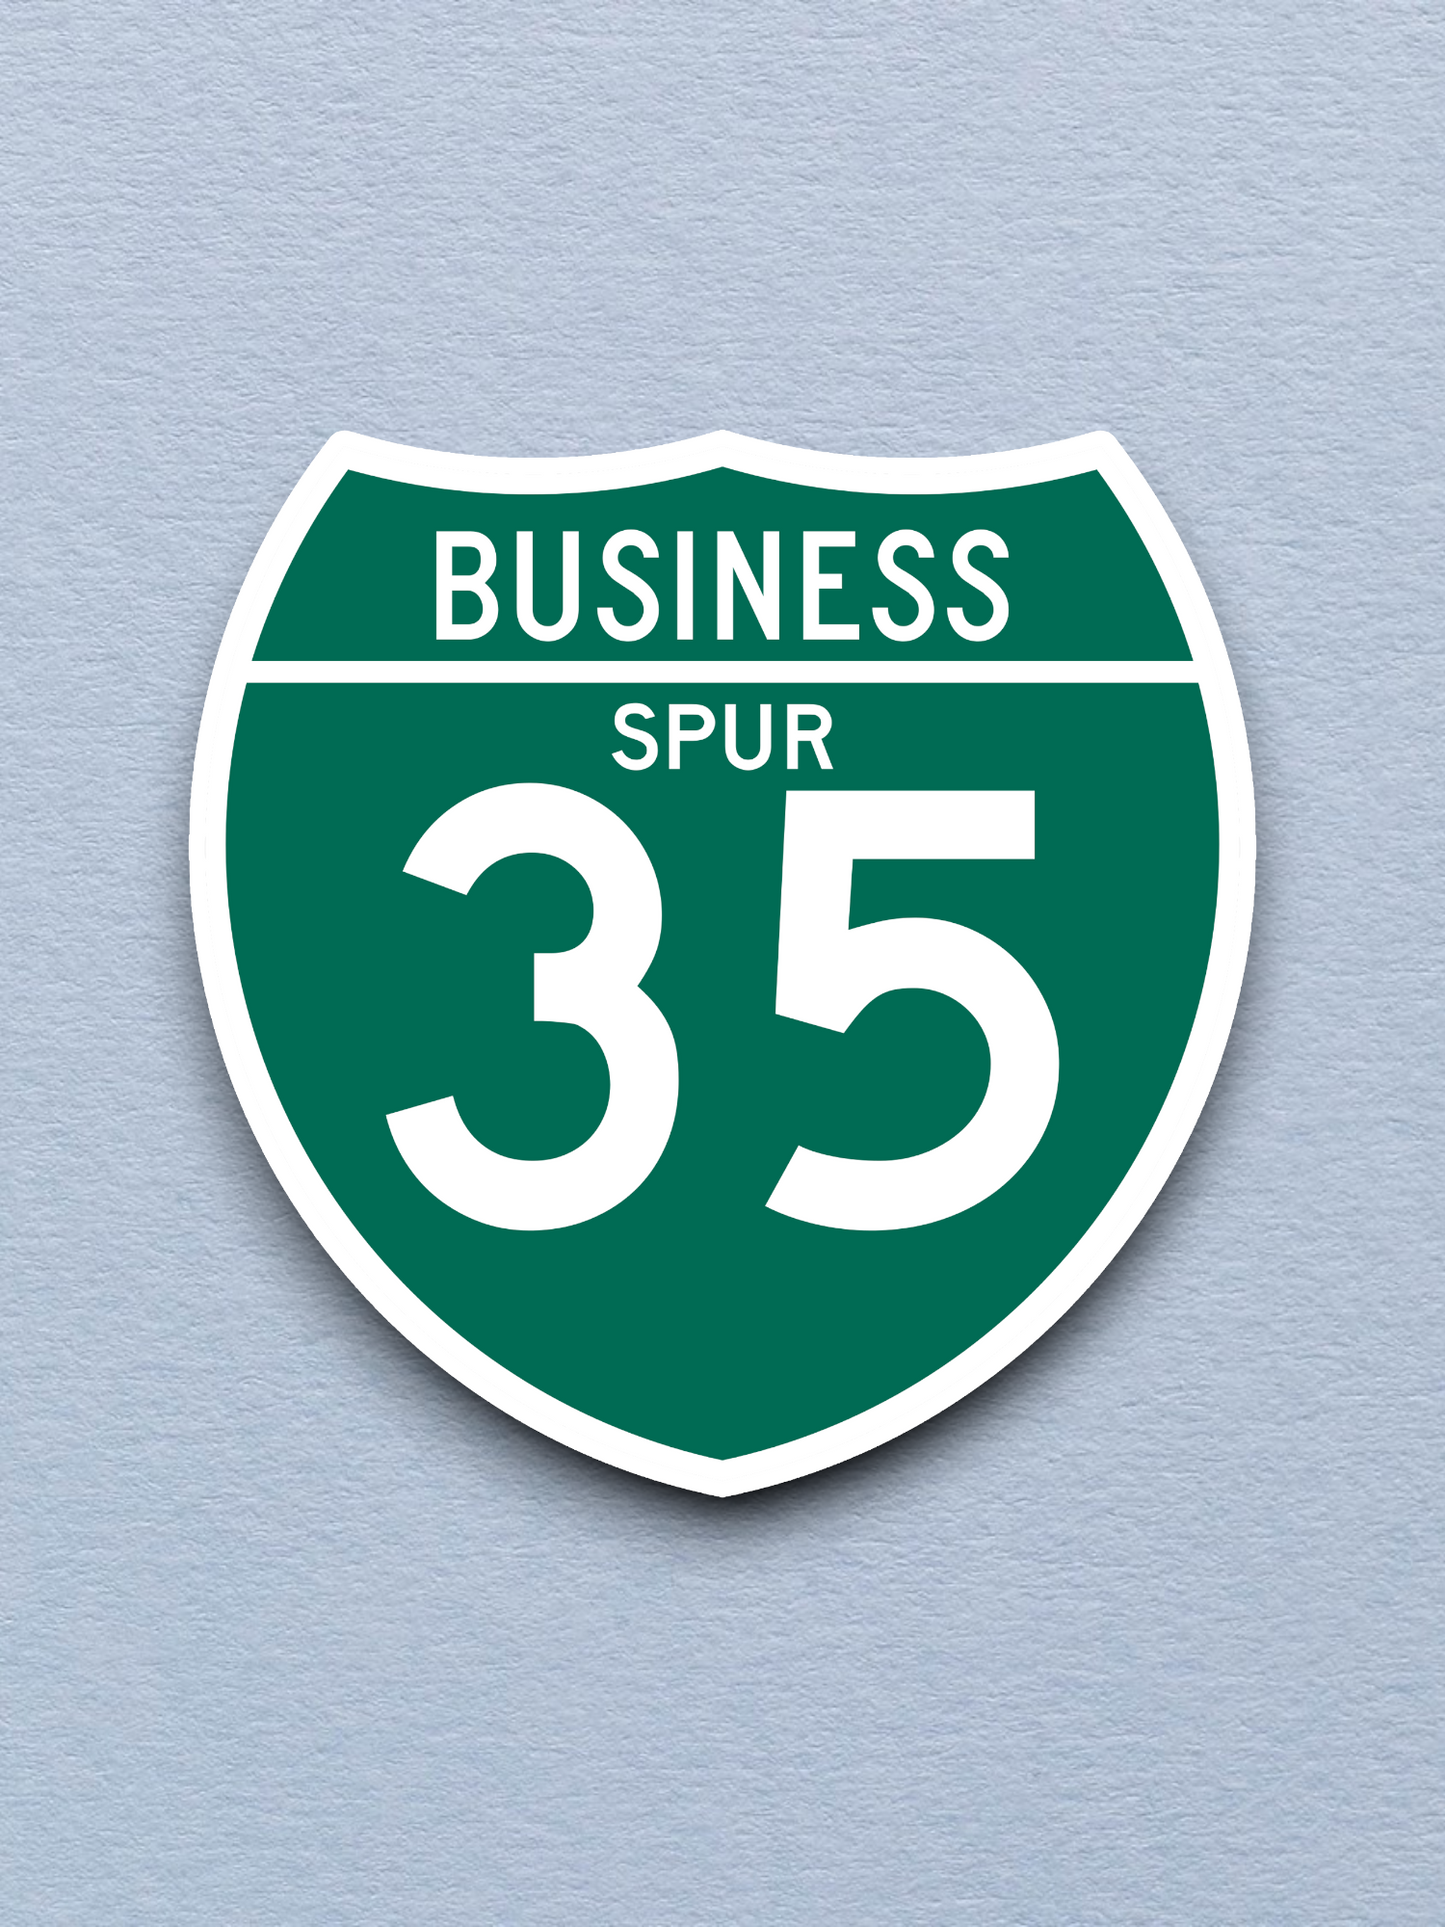 Business Spur 35 Road Sign Sticker